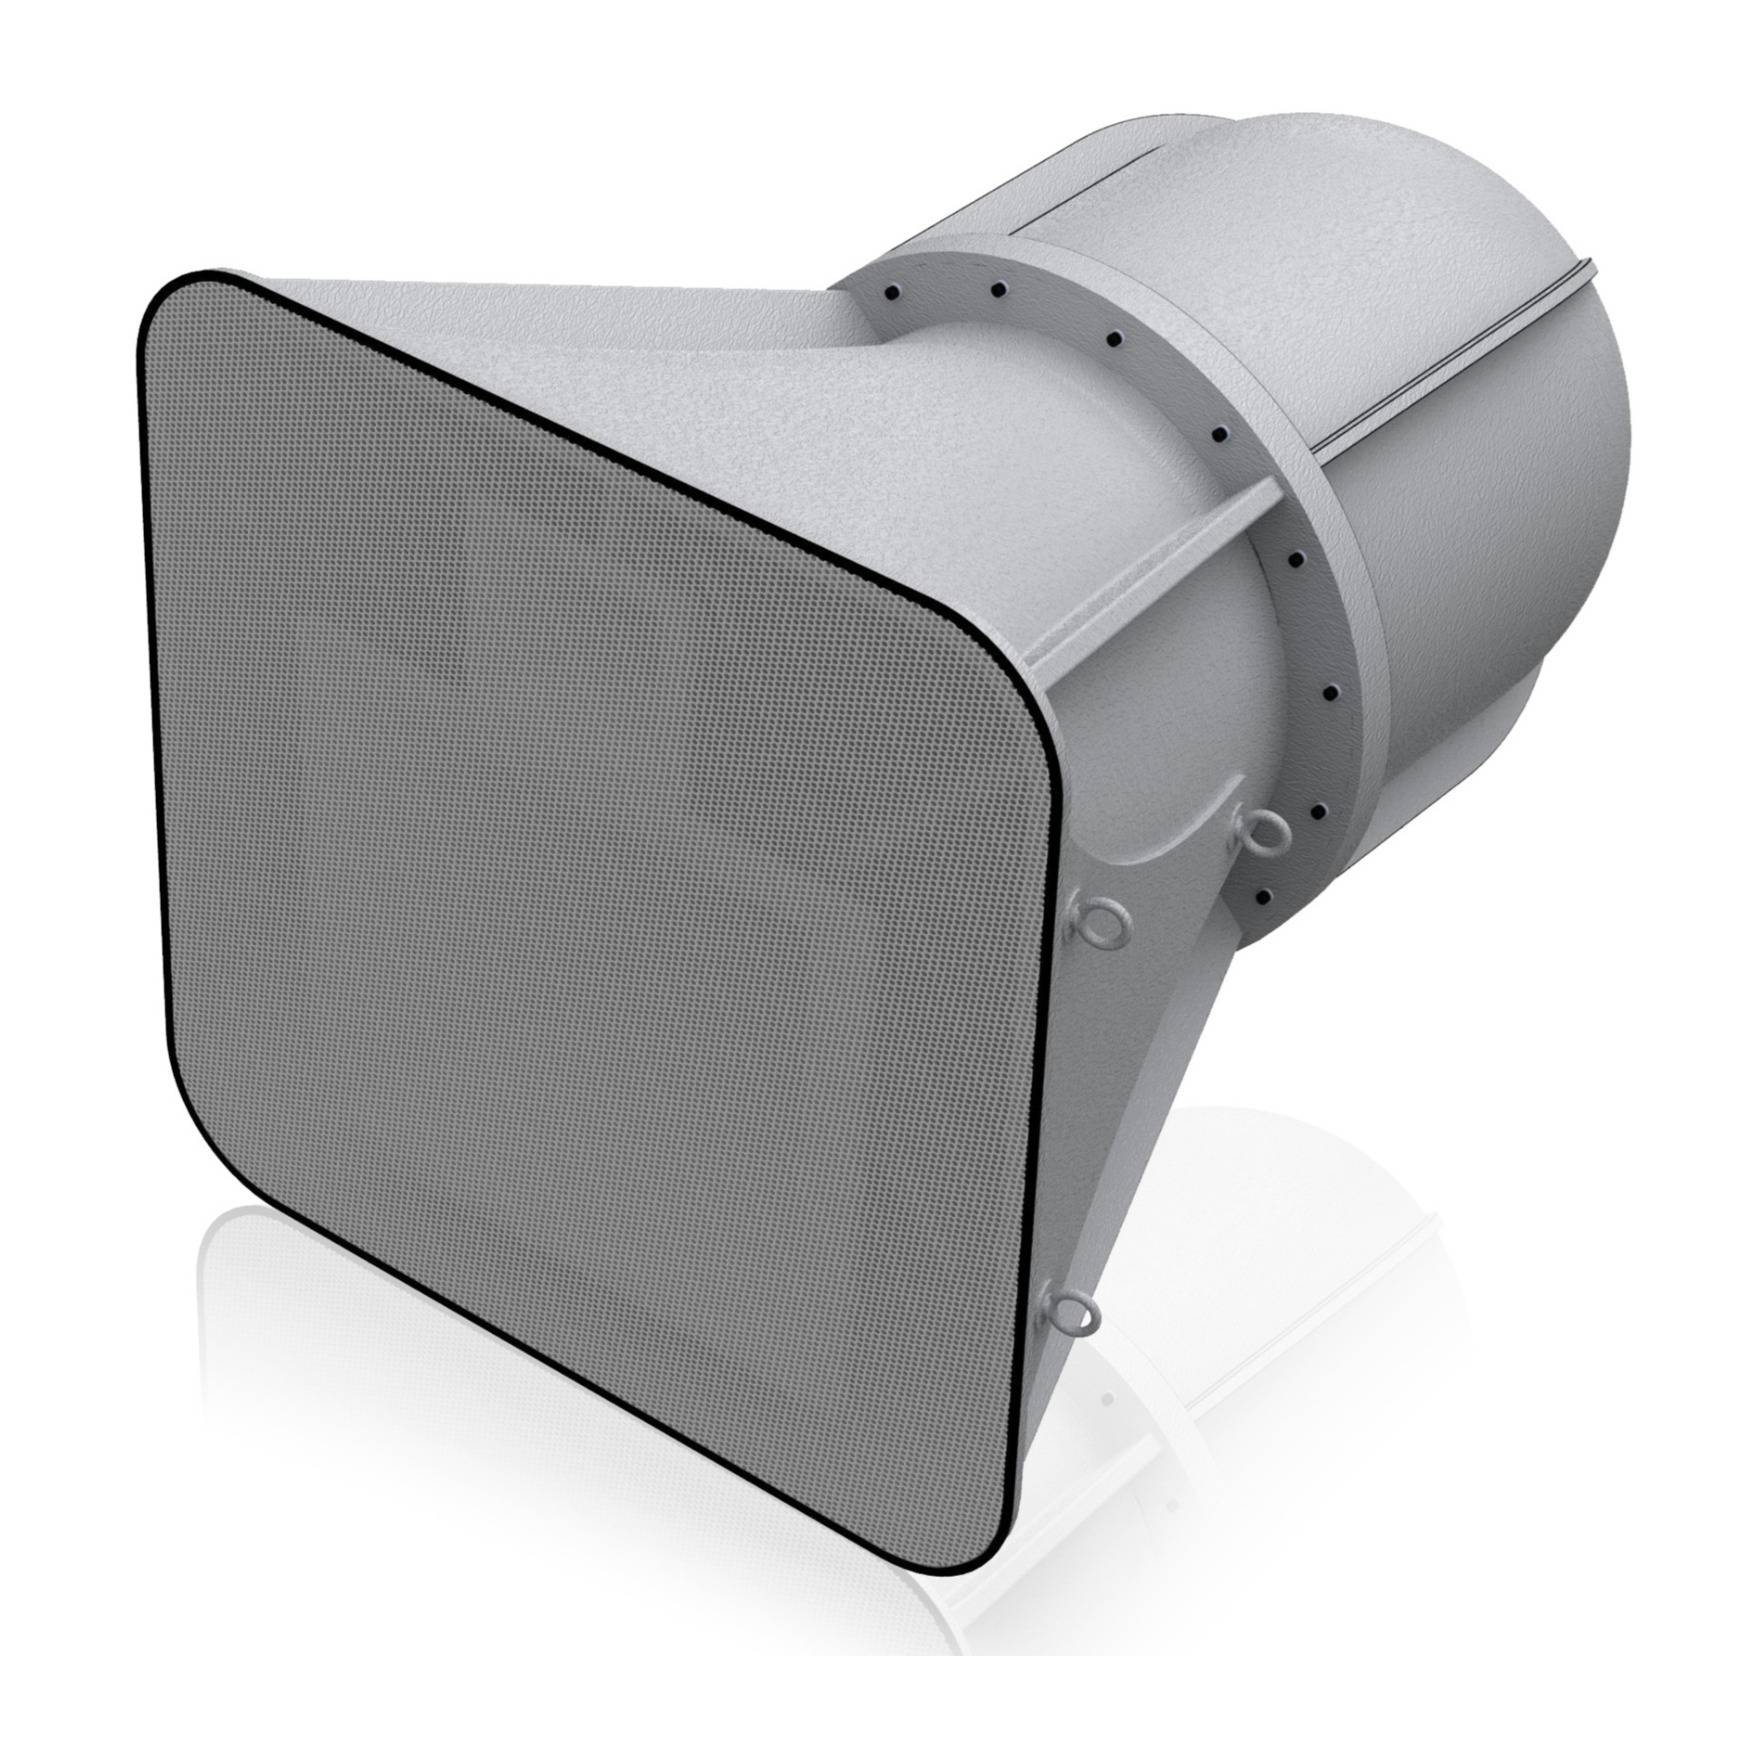 AtlasIED AH94-212 3-Way Stadium Horn Speaker with 90x40-Degree Coverage Pattern (Gray)